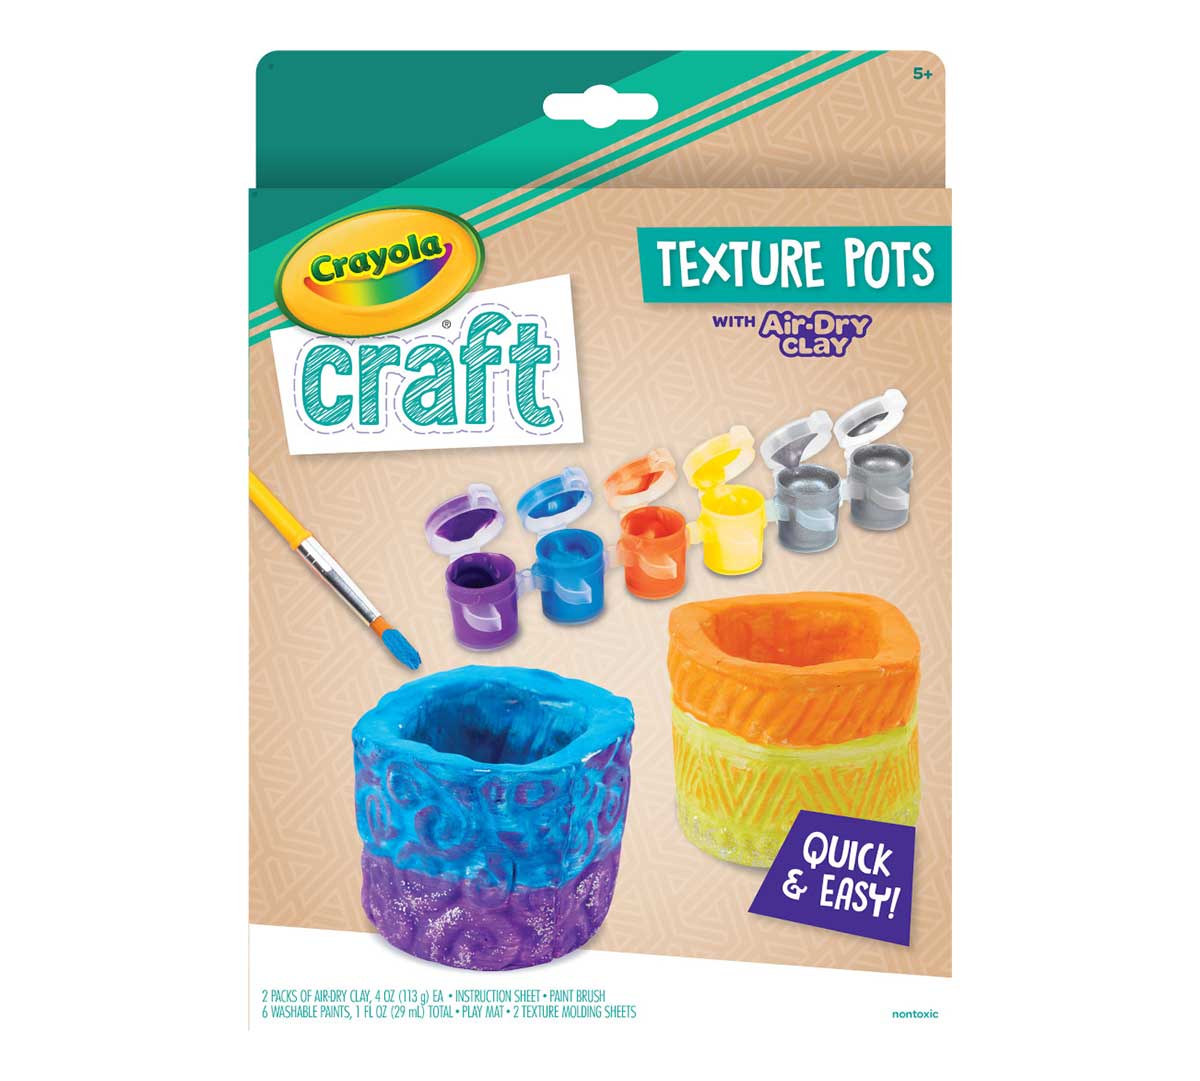 Generoso Oblea mínimo Textured Pots Craft Kit, Air Dry Clay Craft | Crayola.com | Crayola